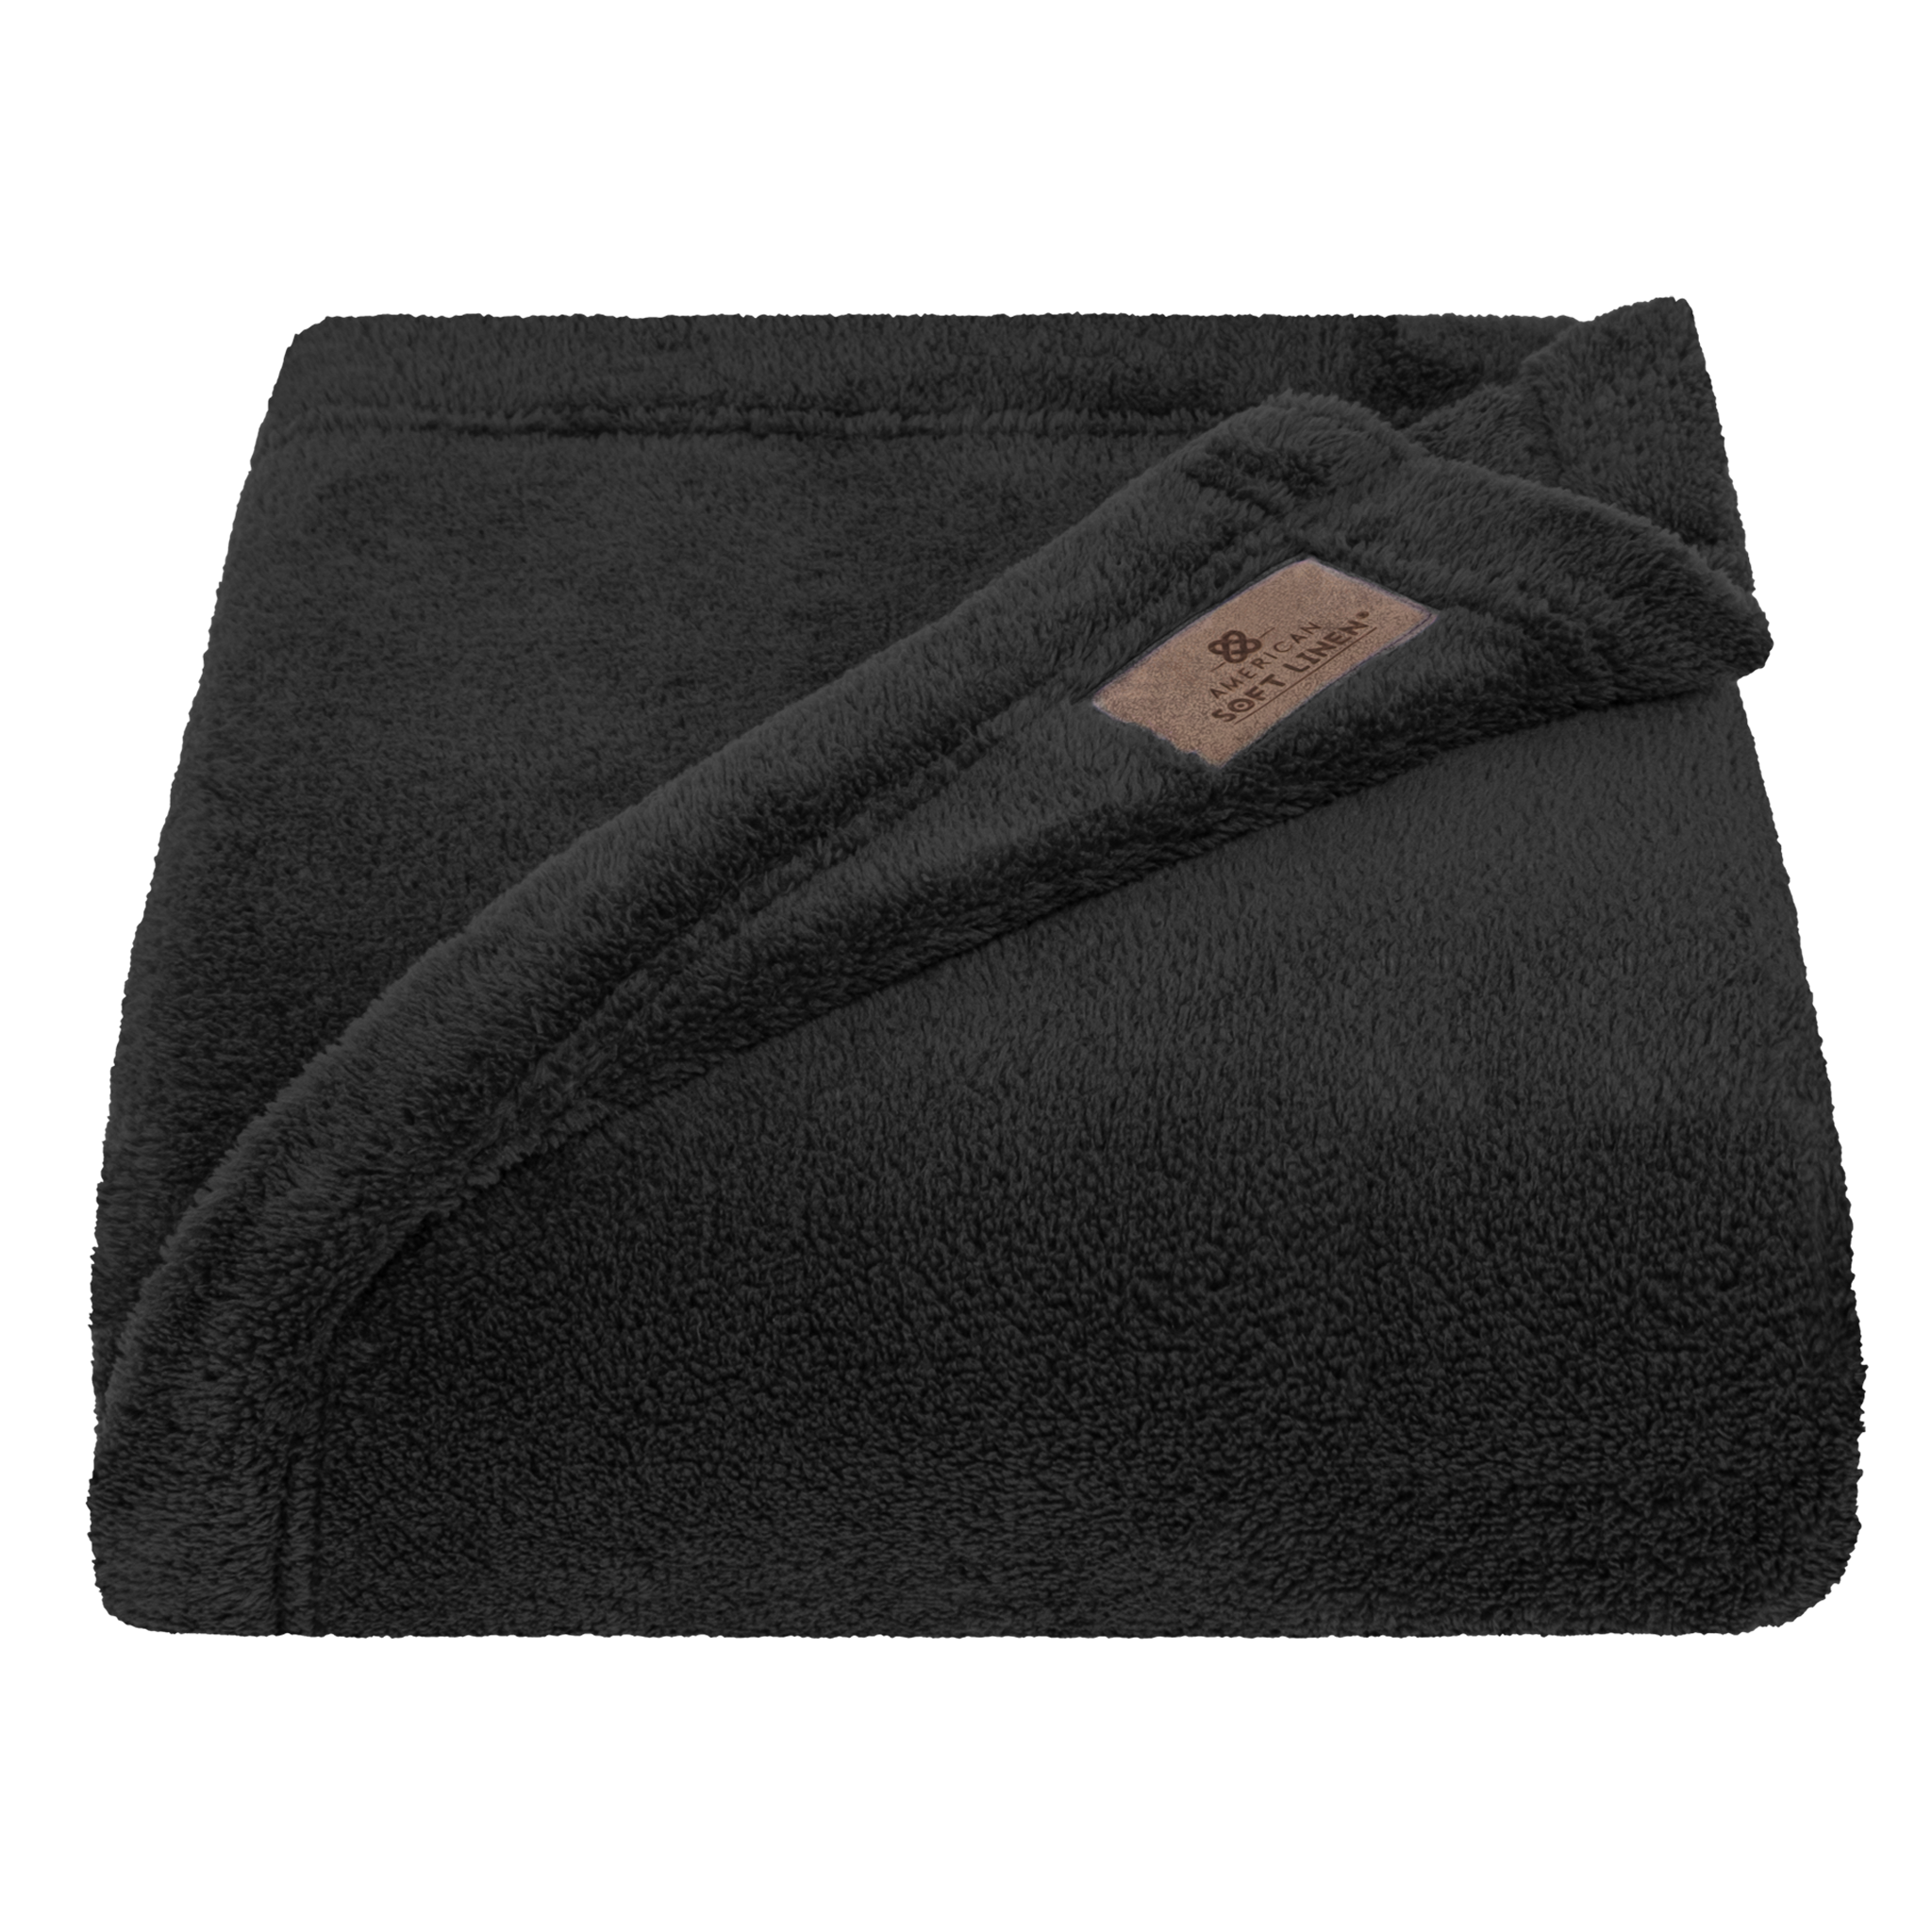 American Soft Linen - Bedding Fleece Blanket - Throw Size 50x60 inches - Black - 3